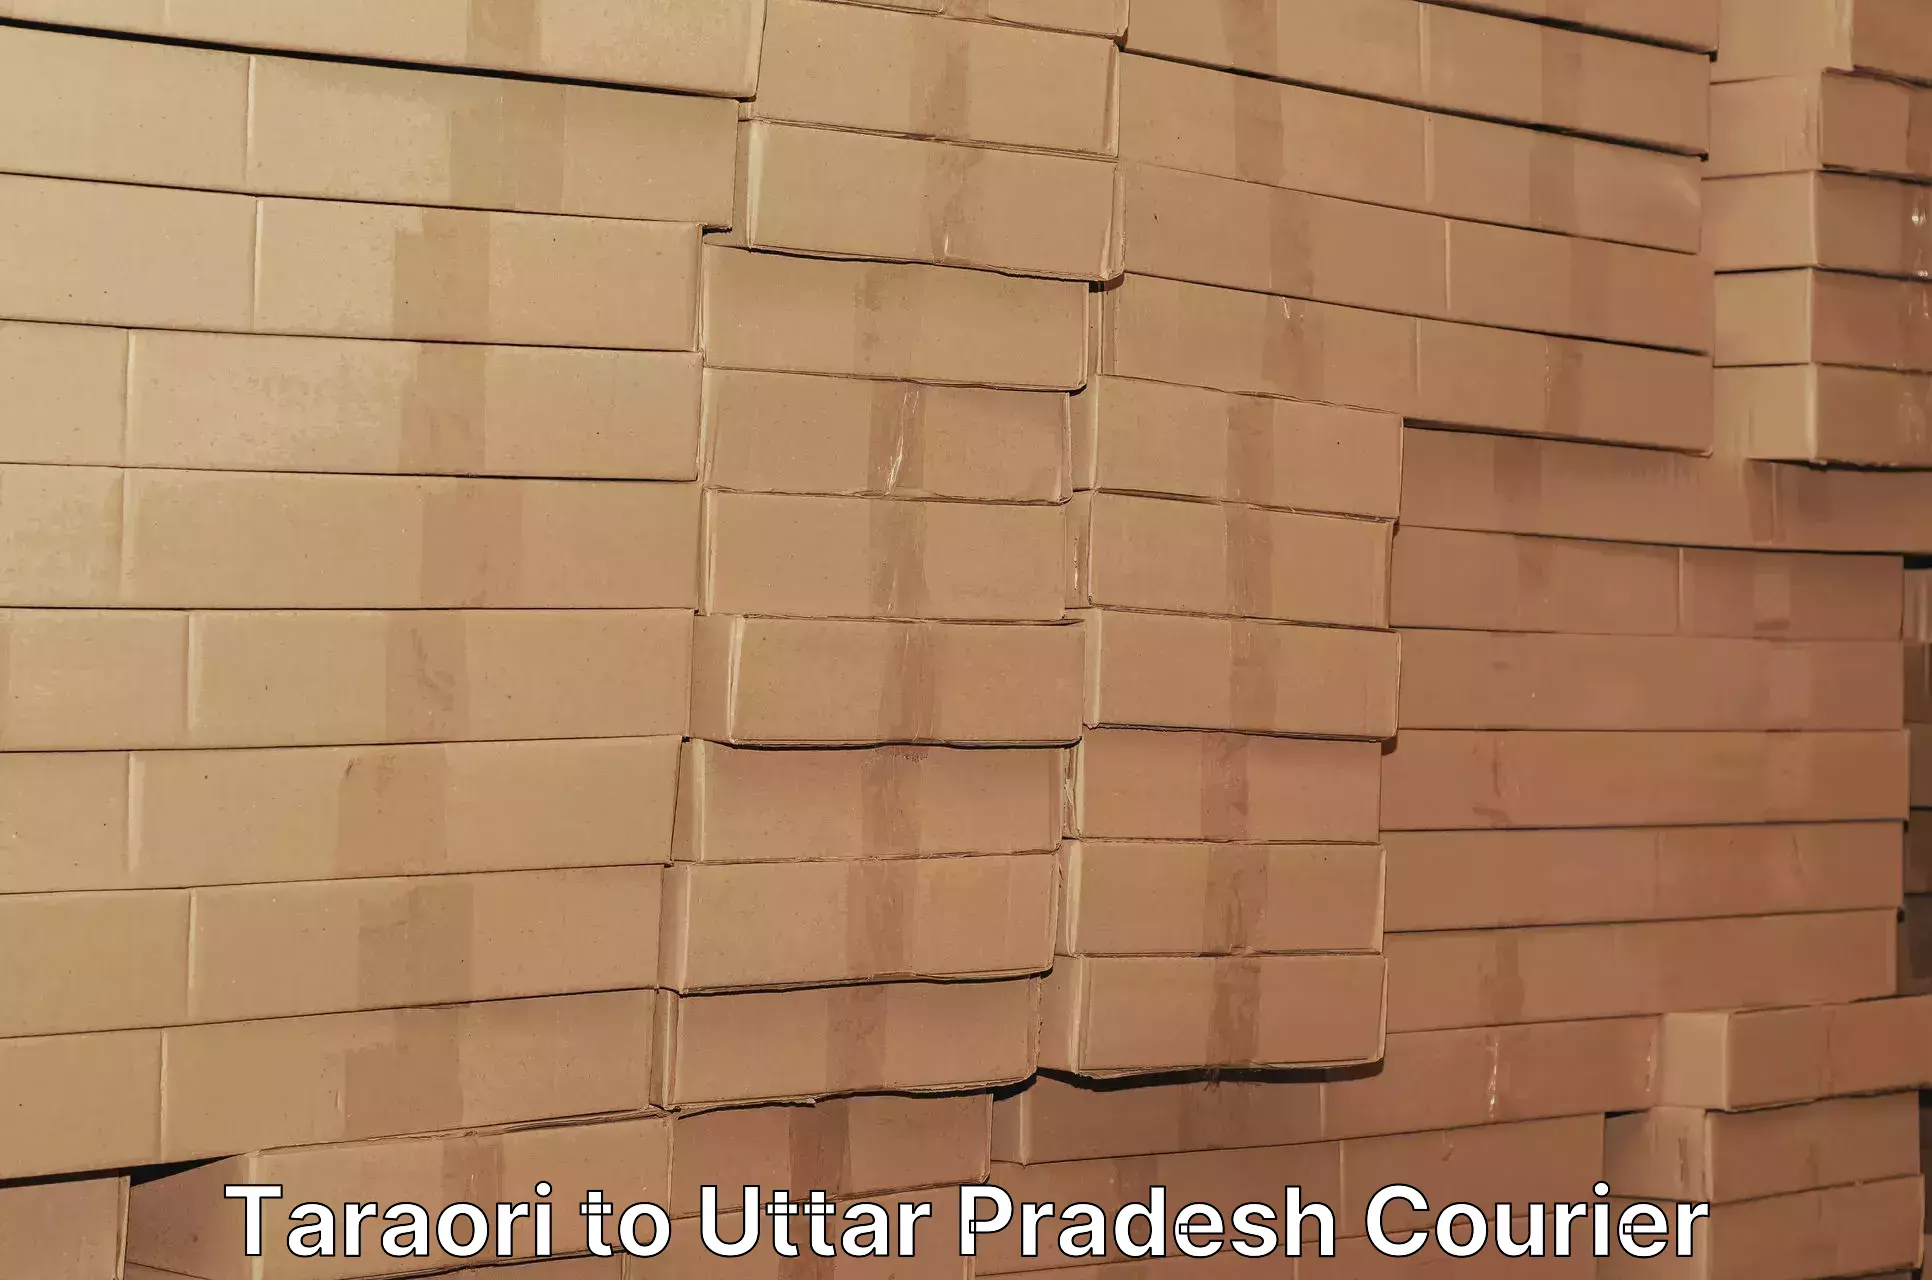 Express logistics providers Taraori to Uttar Pradesh